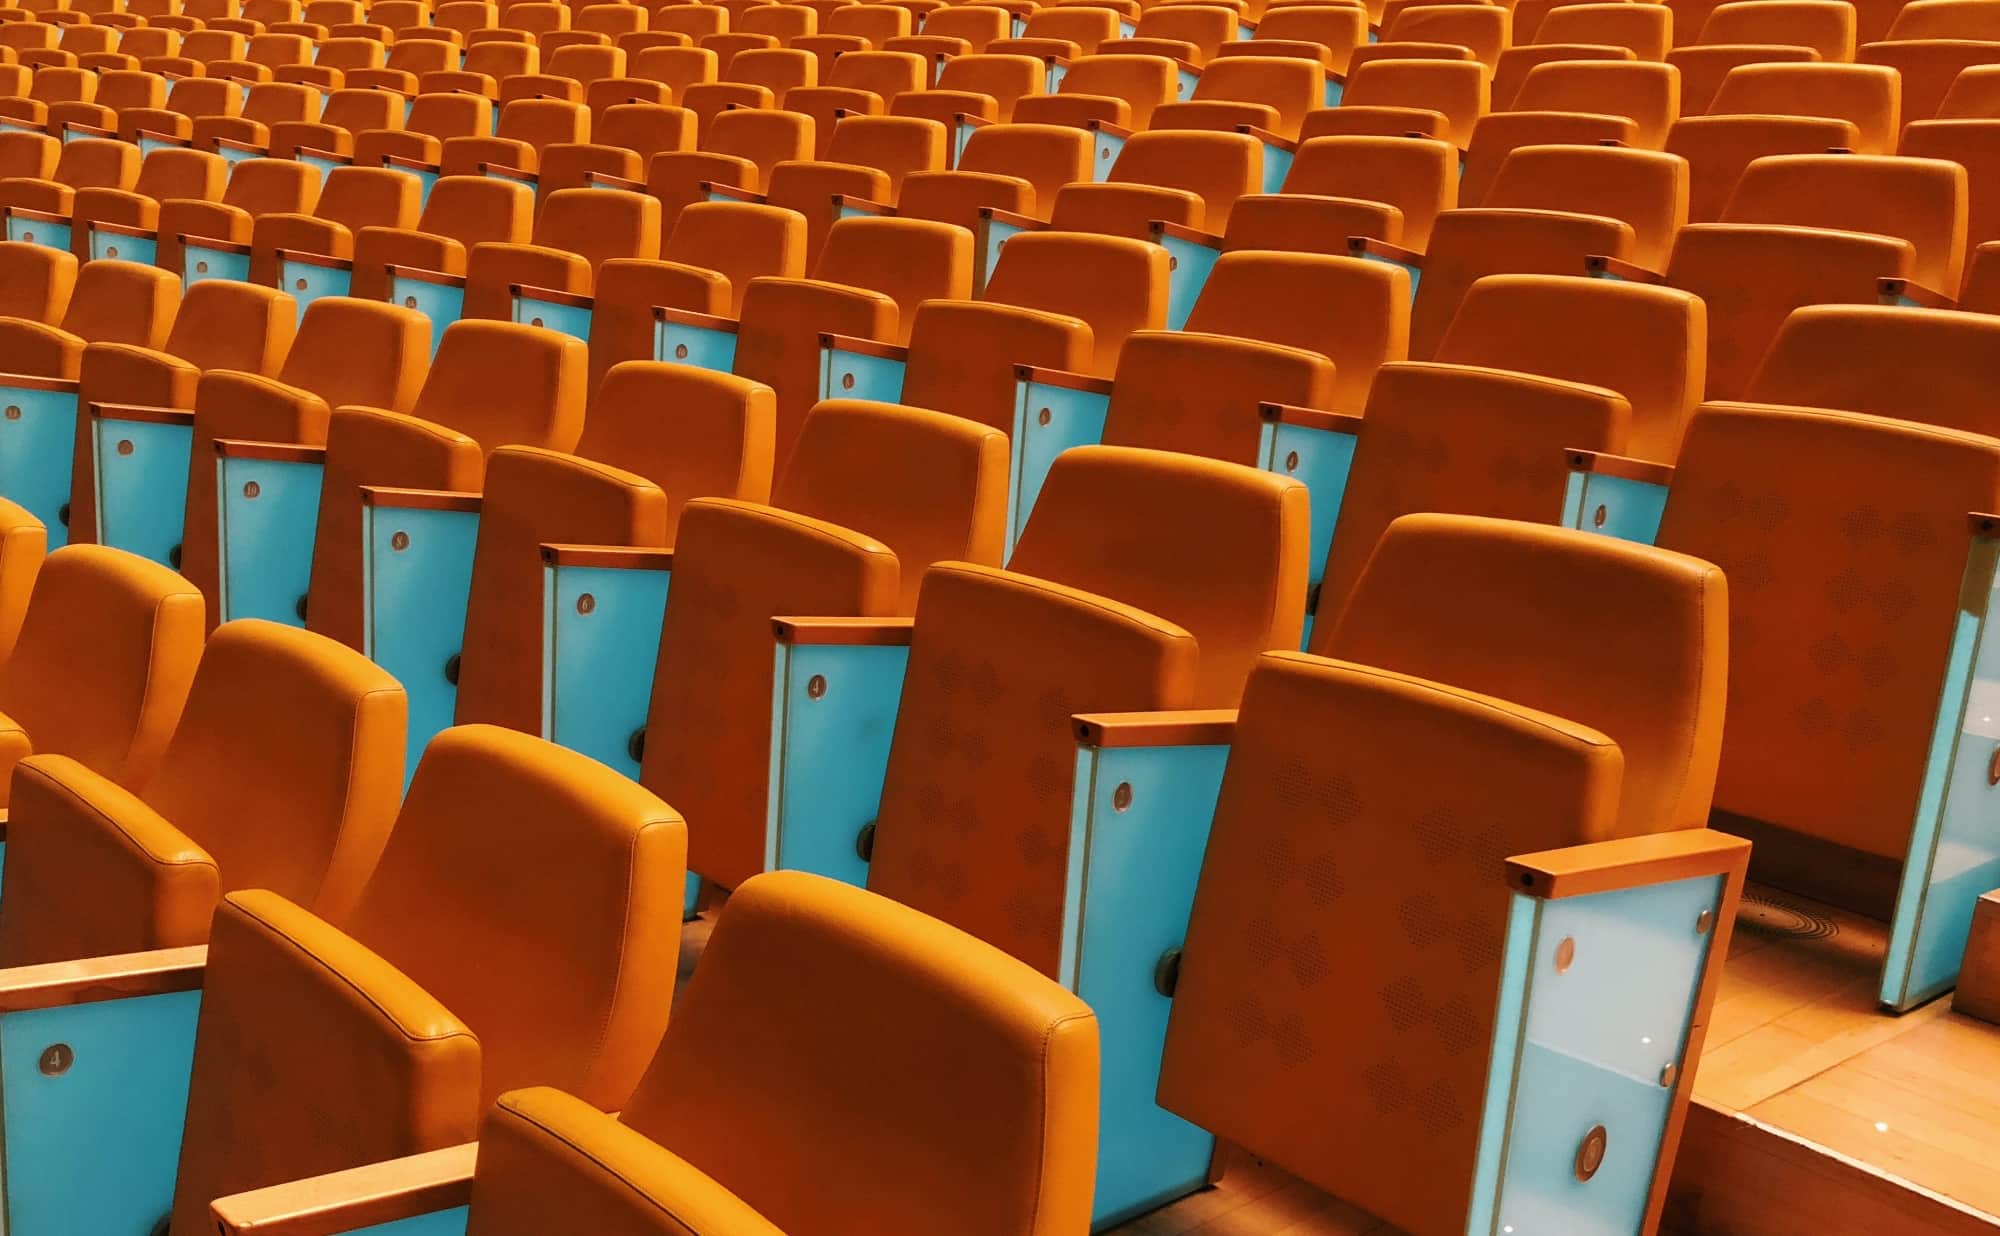 Orange stadium seats with multiple rows and columns.